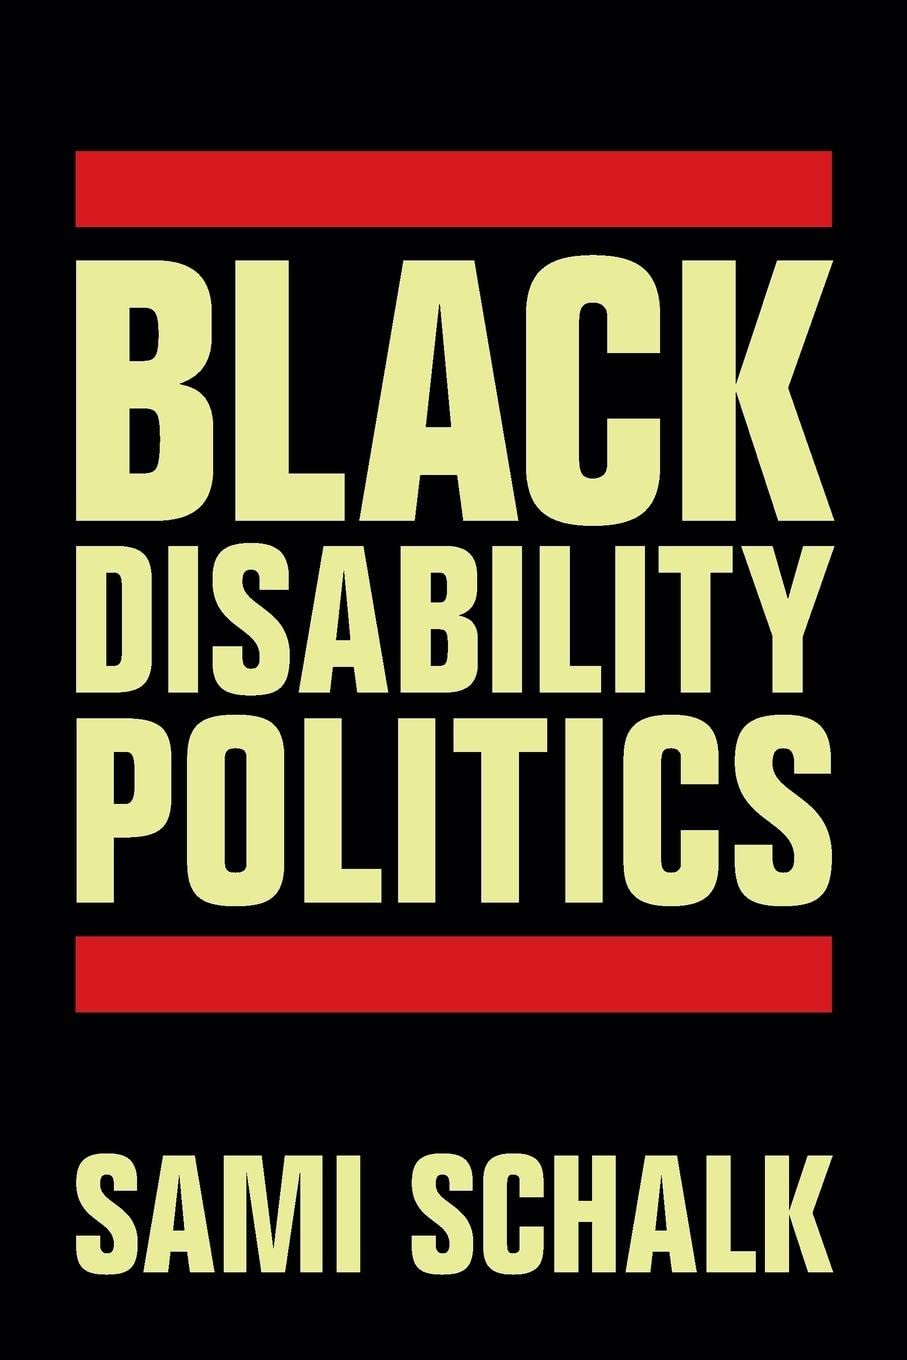 Black Disability Politics, by Sami Schalk